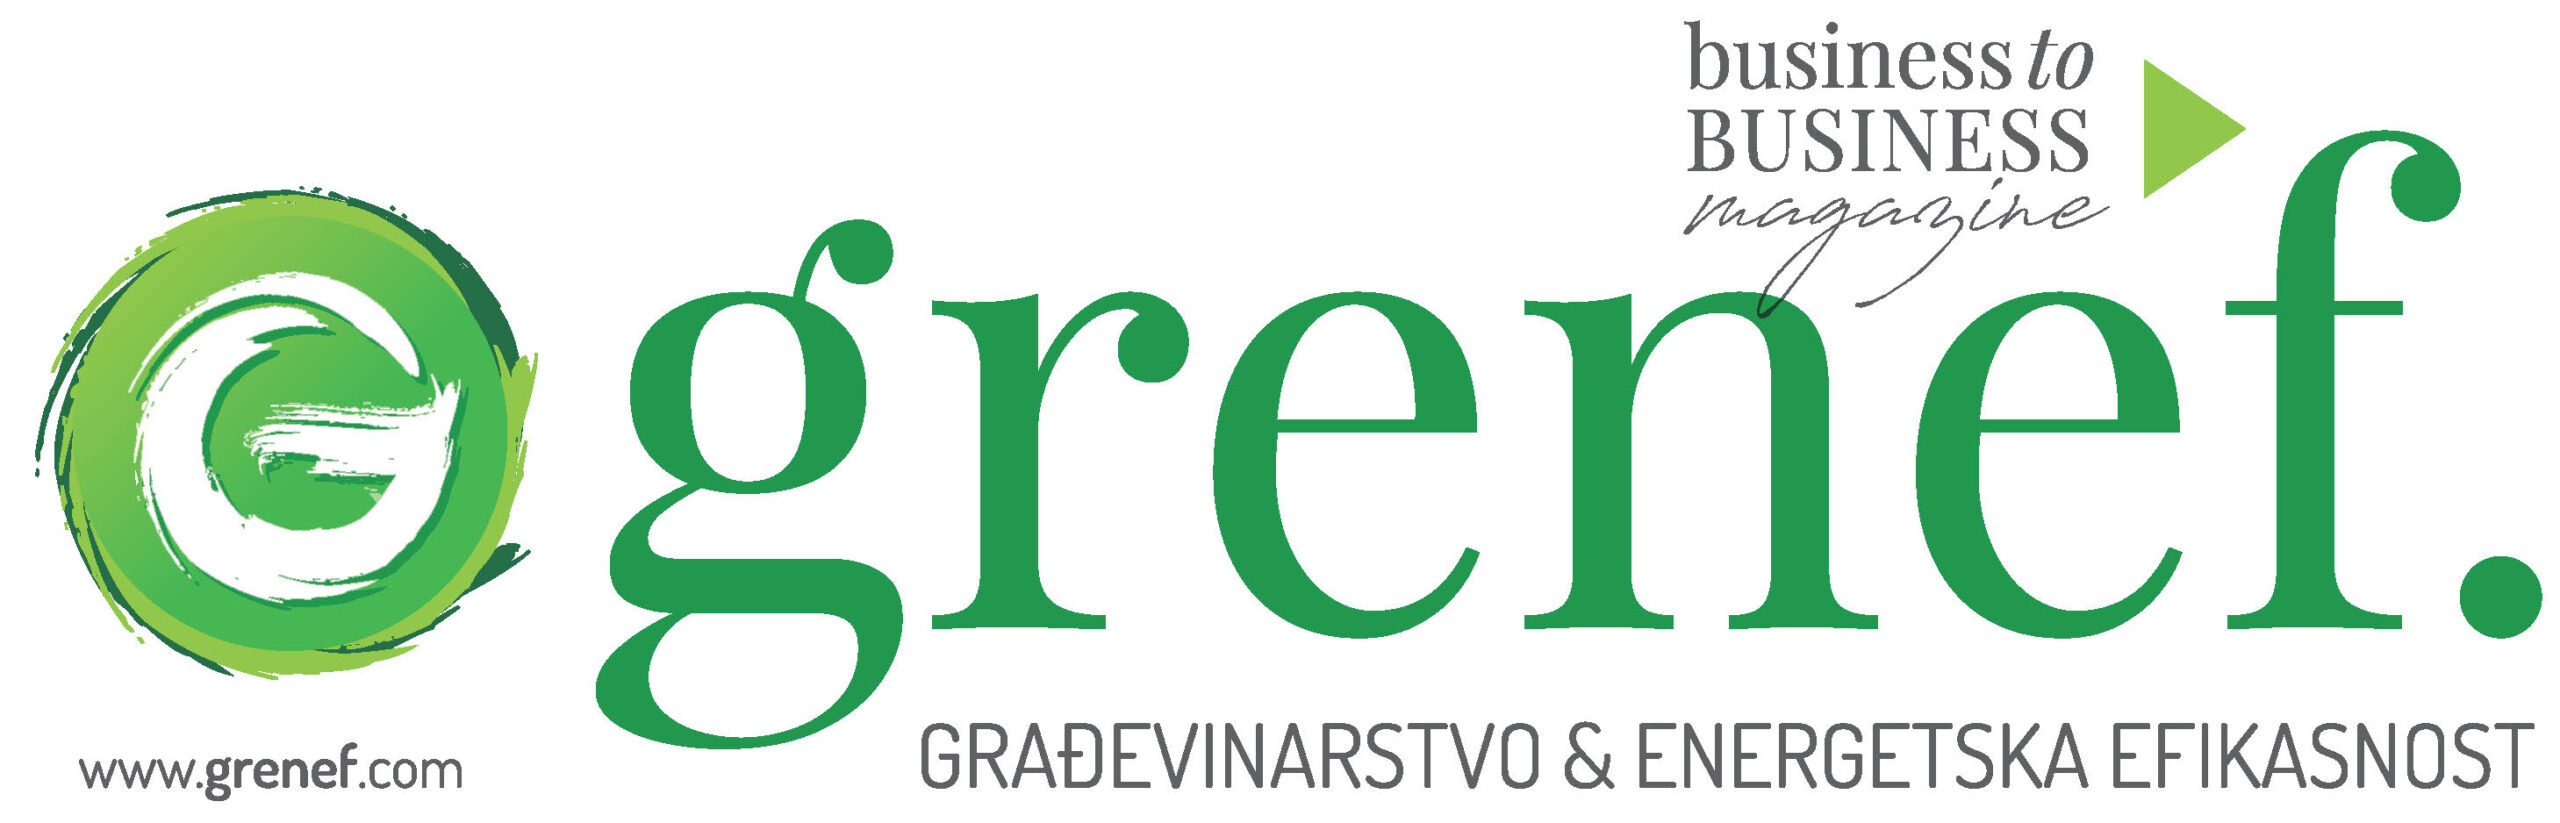 Grenef logo